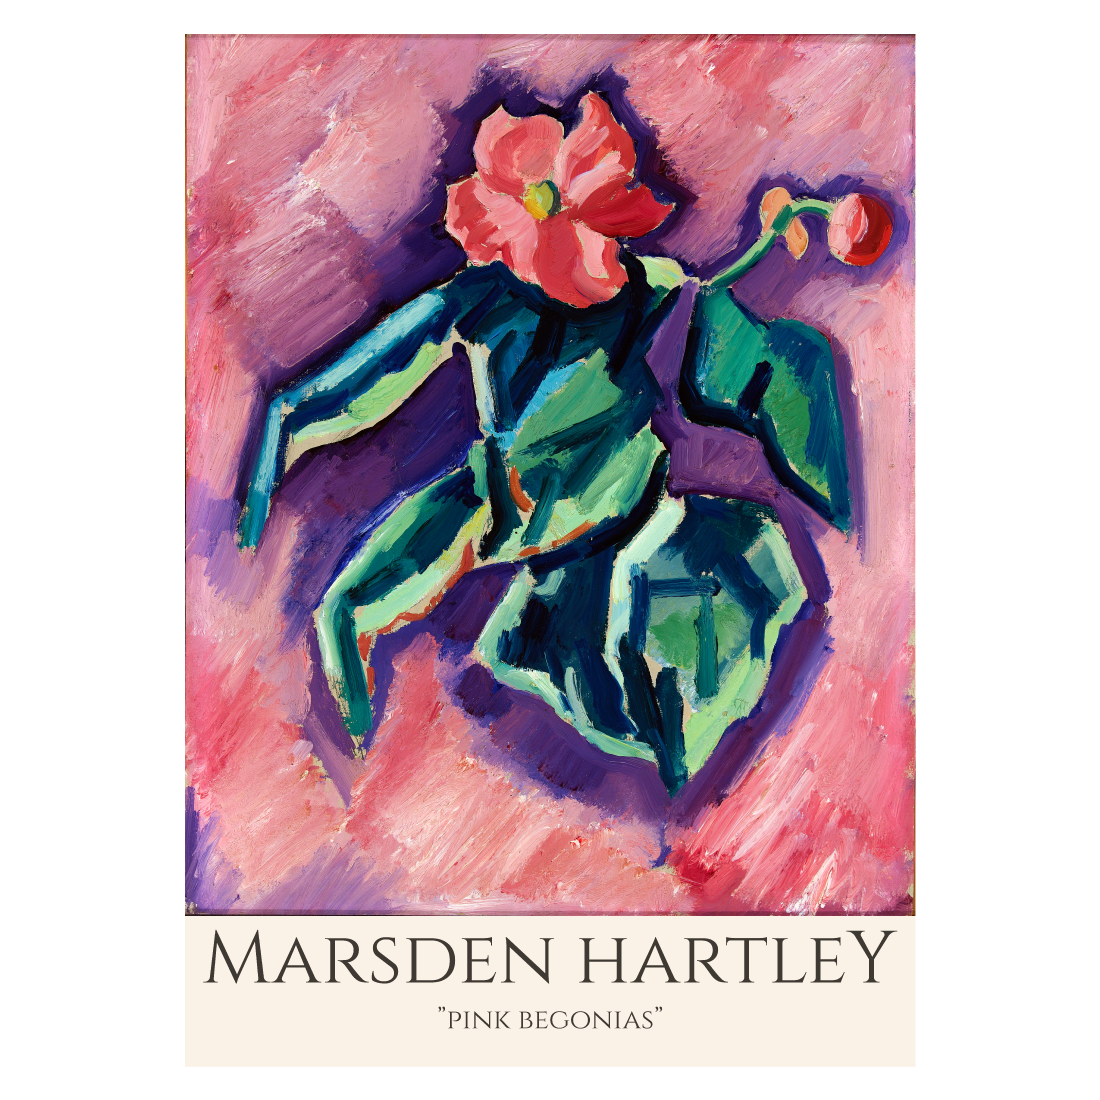 Kunstplakat med Marsden Hartley "Pink Begonias"